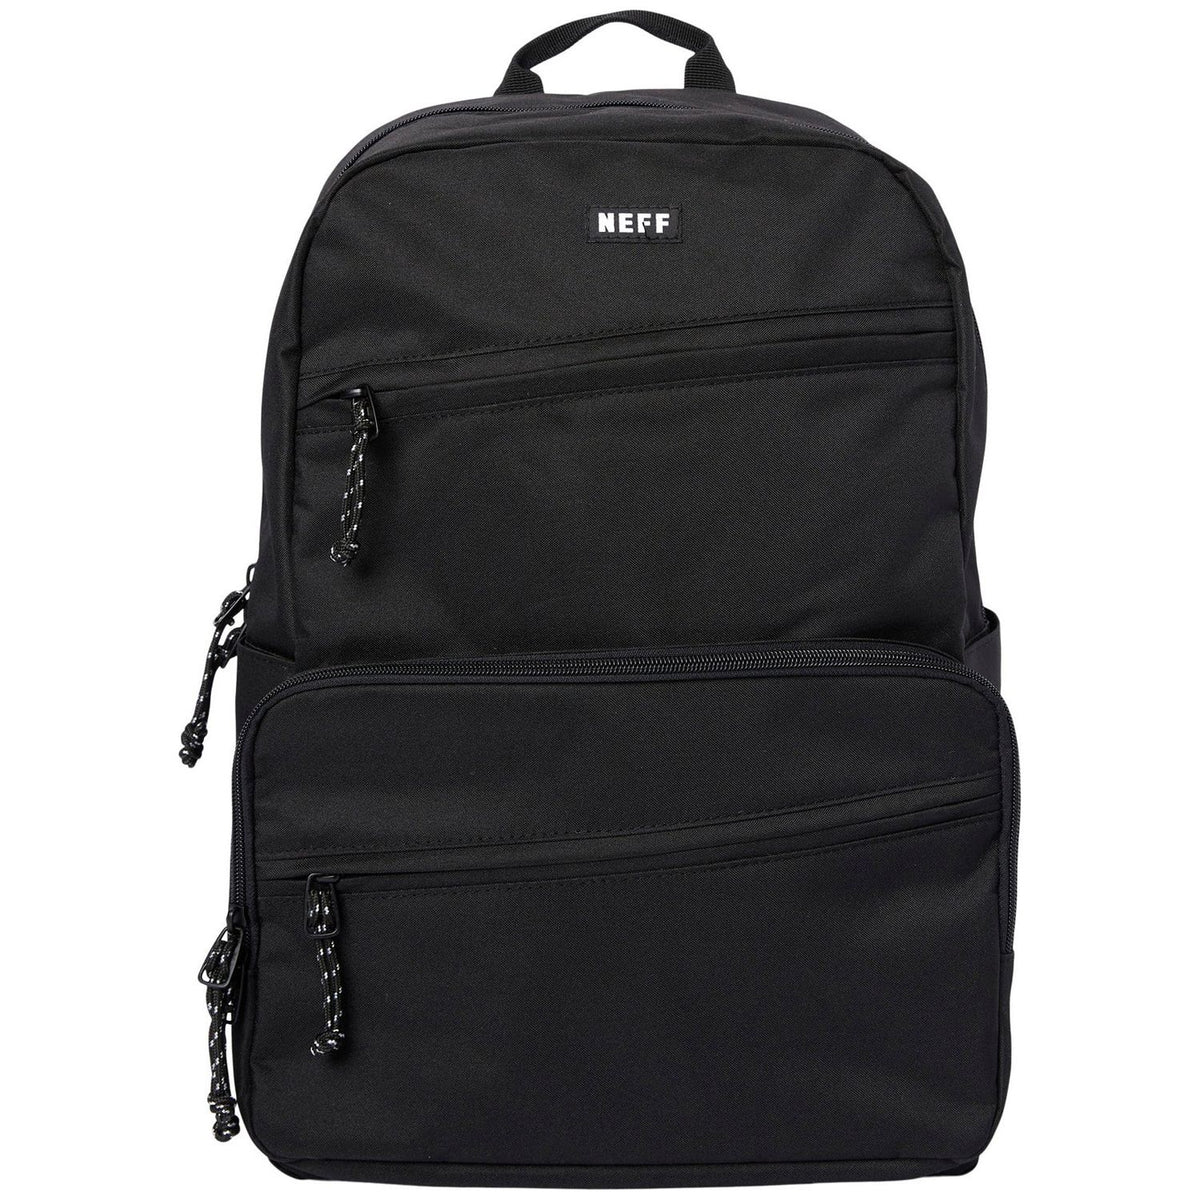 Neff Momentum Backpack